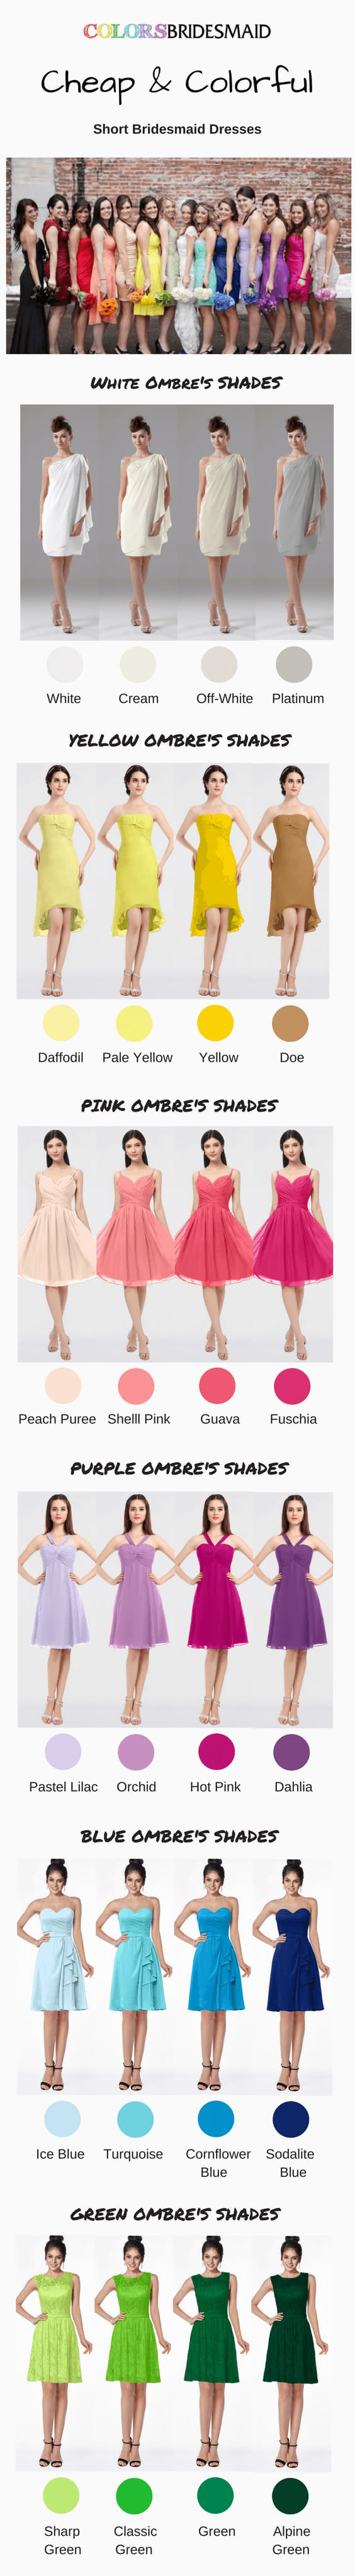 Short Cheap Bridesmaid Dresses in Popular Color Shade